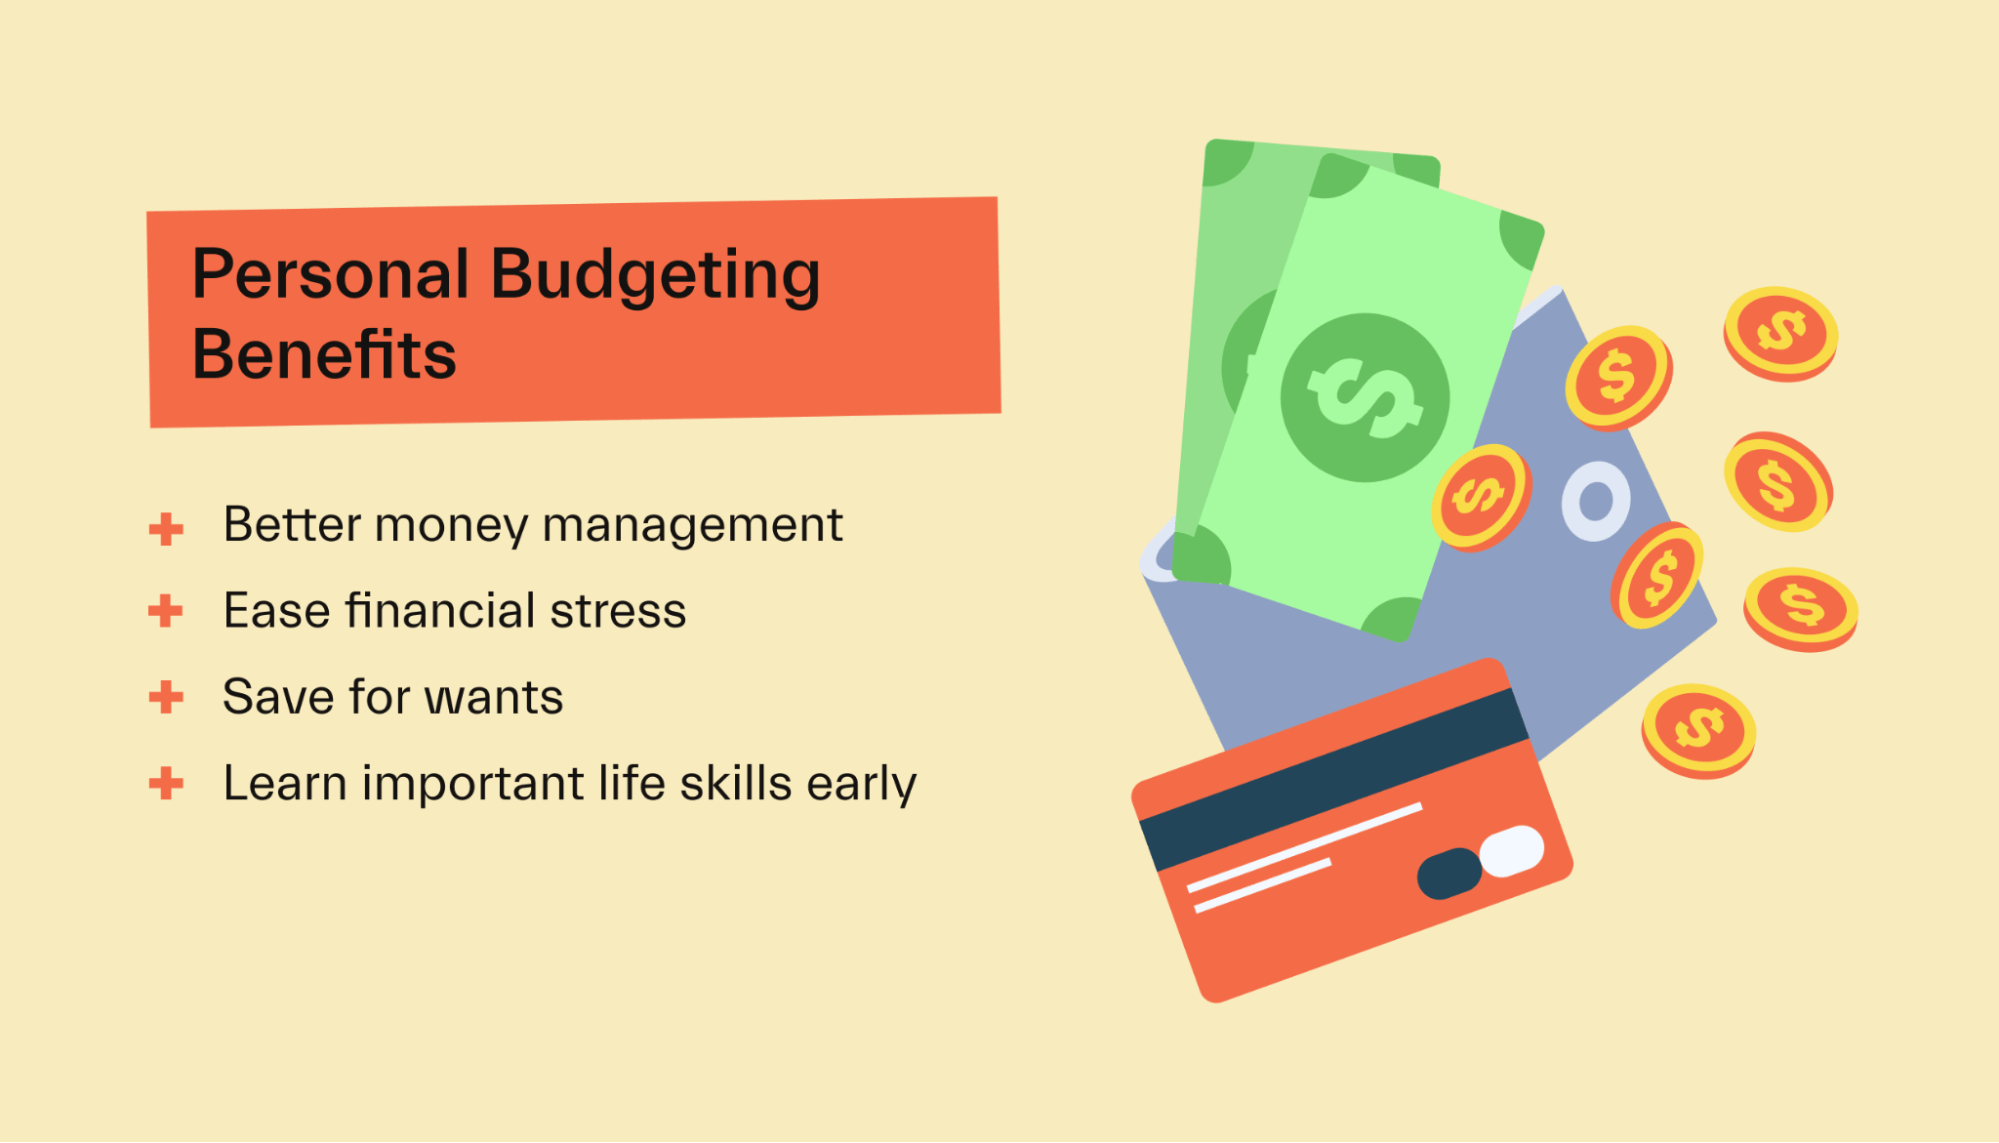 Personal Budgeting Benefits